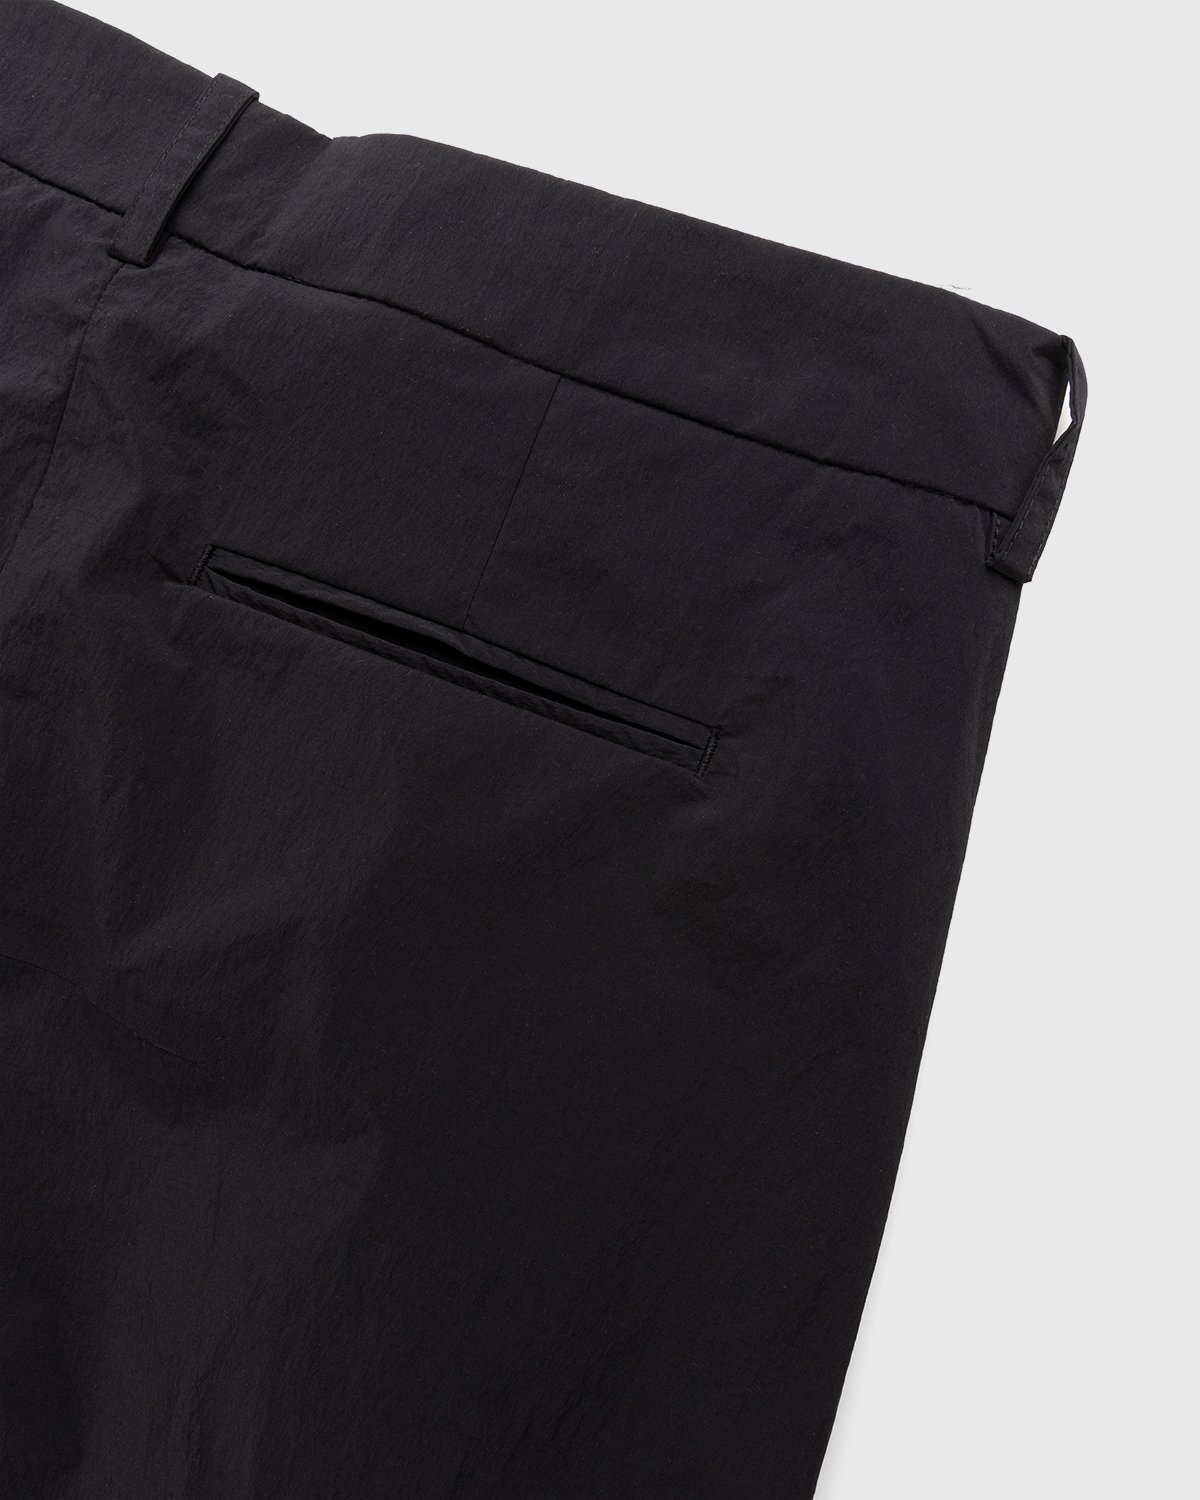 A-Cold-Wall* - Stealth Nylon Pant Black - Clothing - Black - Image 3